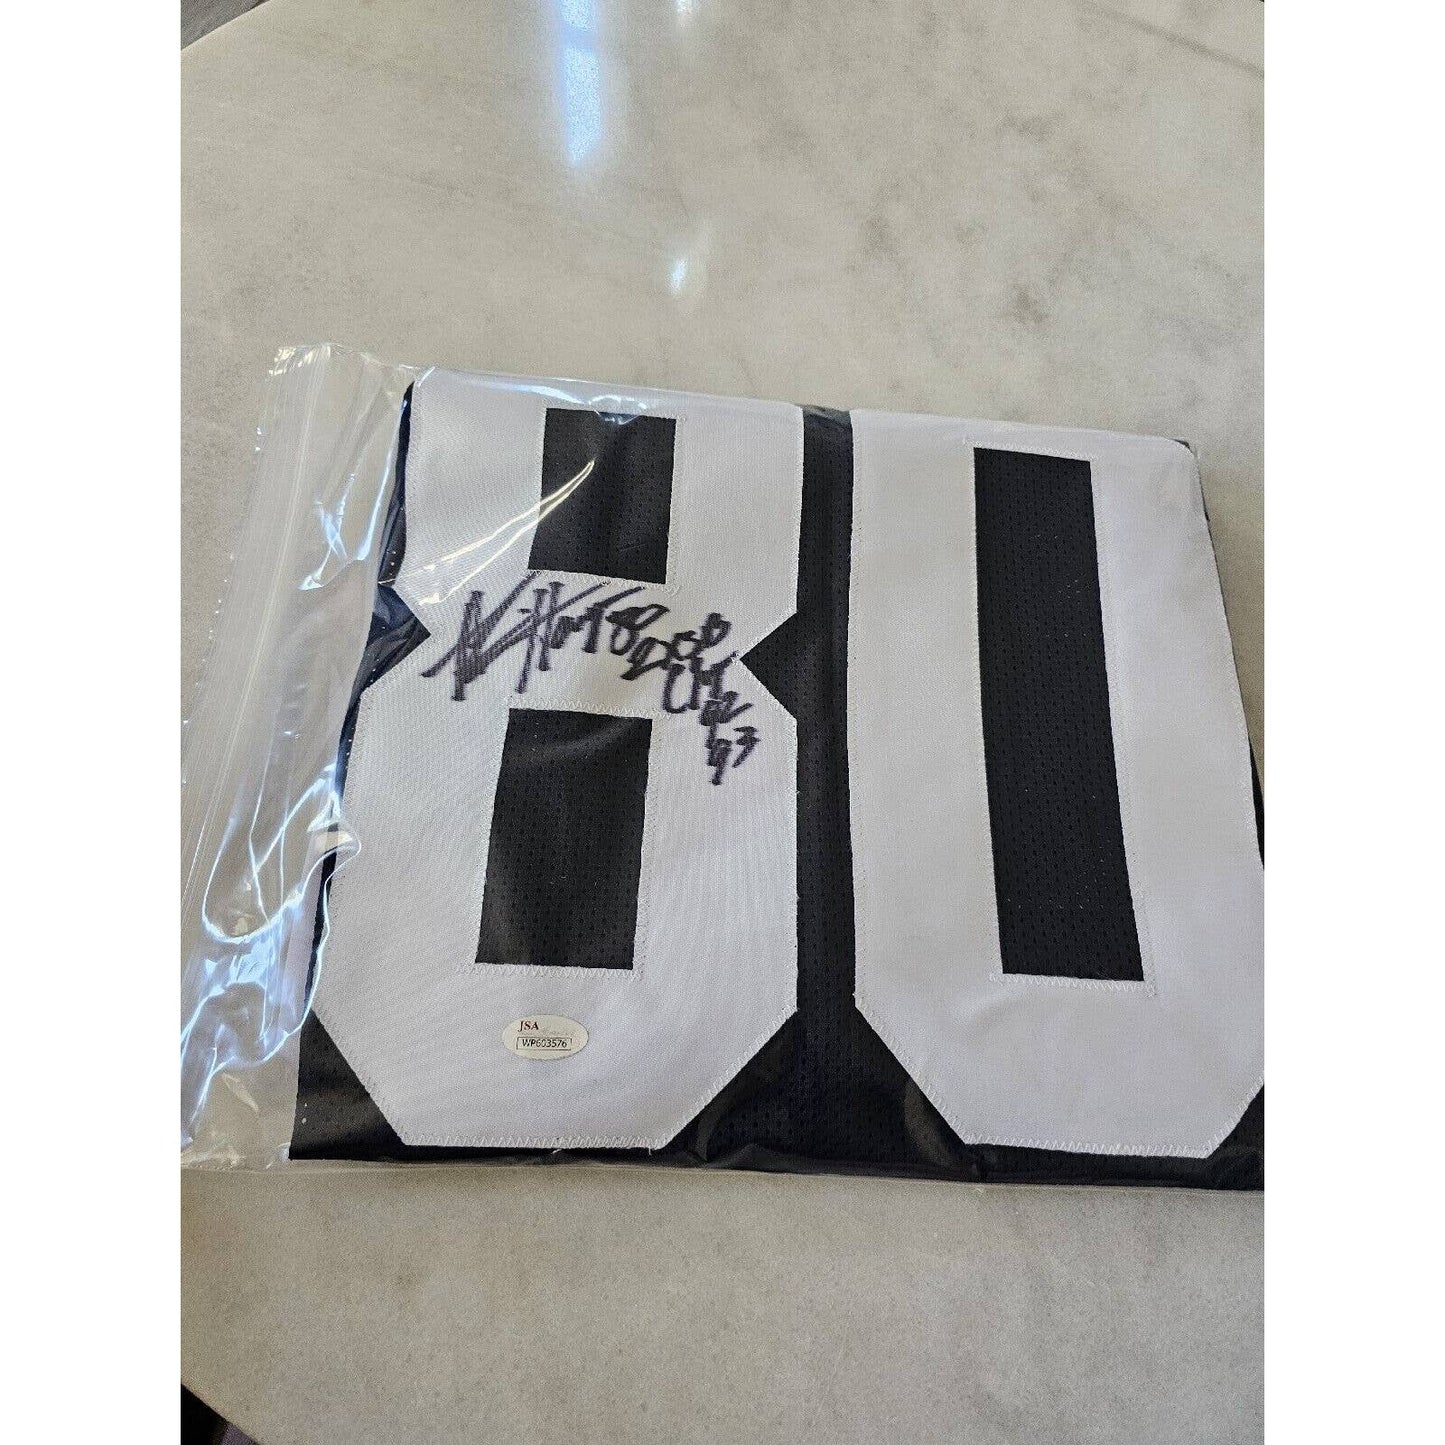 Alvin Harper Autographed/Signed Jersey JSA COA Dallas Cowboys 2x SB CHAMP 92 93